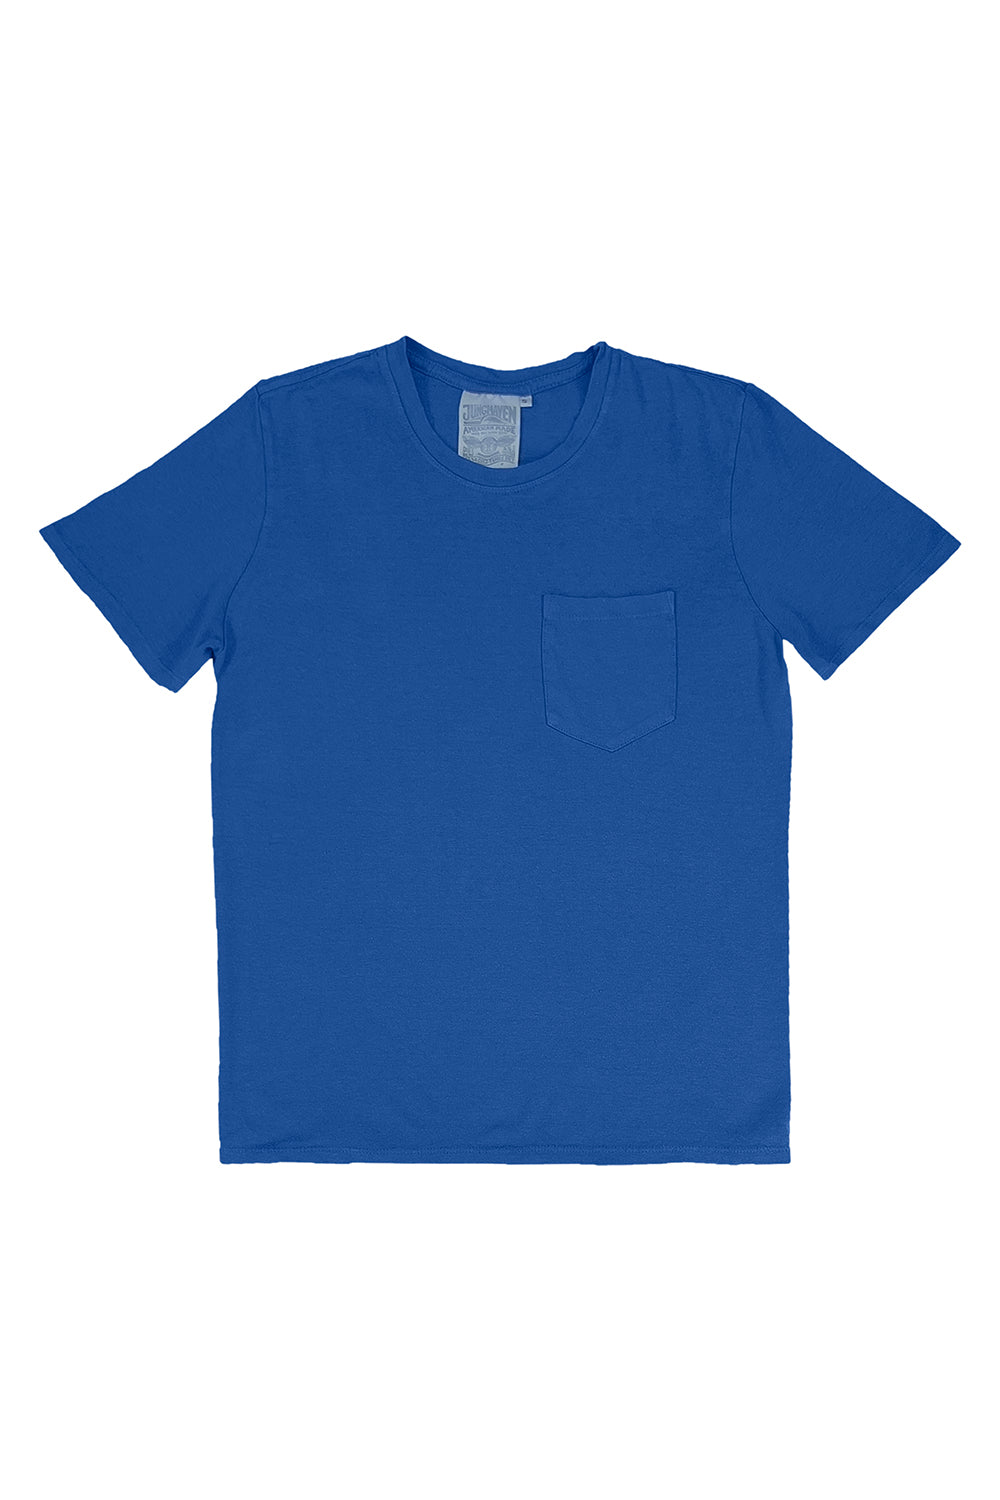 Baja Pocket Tee | Jungmaven Hemp Clothing & Accessories / Color: Galaxy Blue